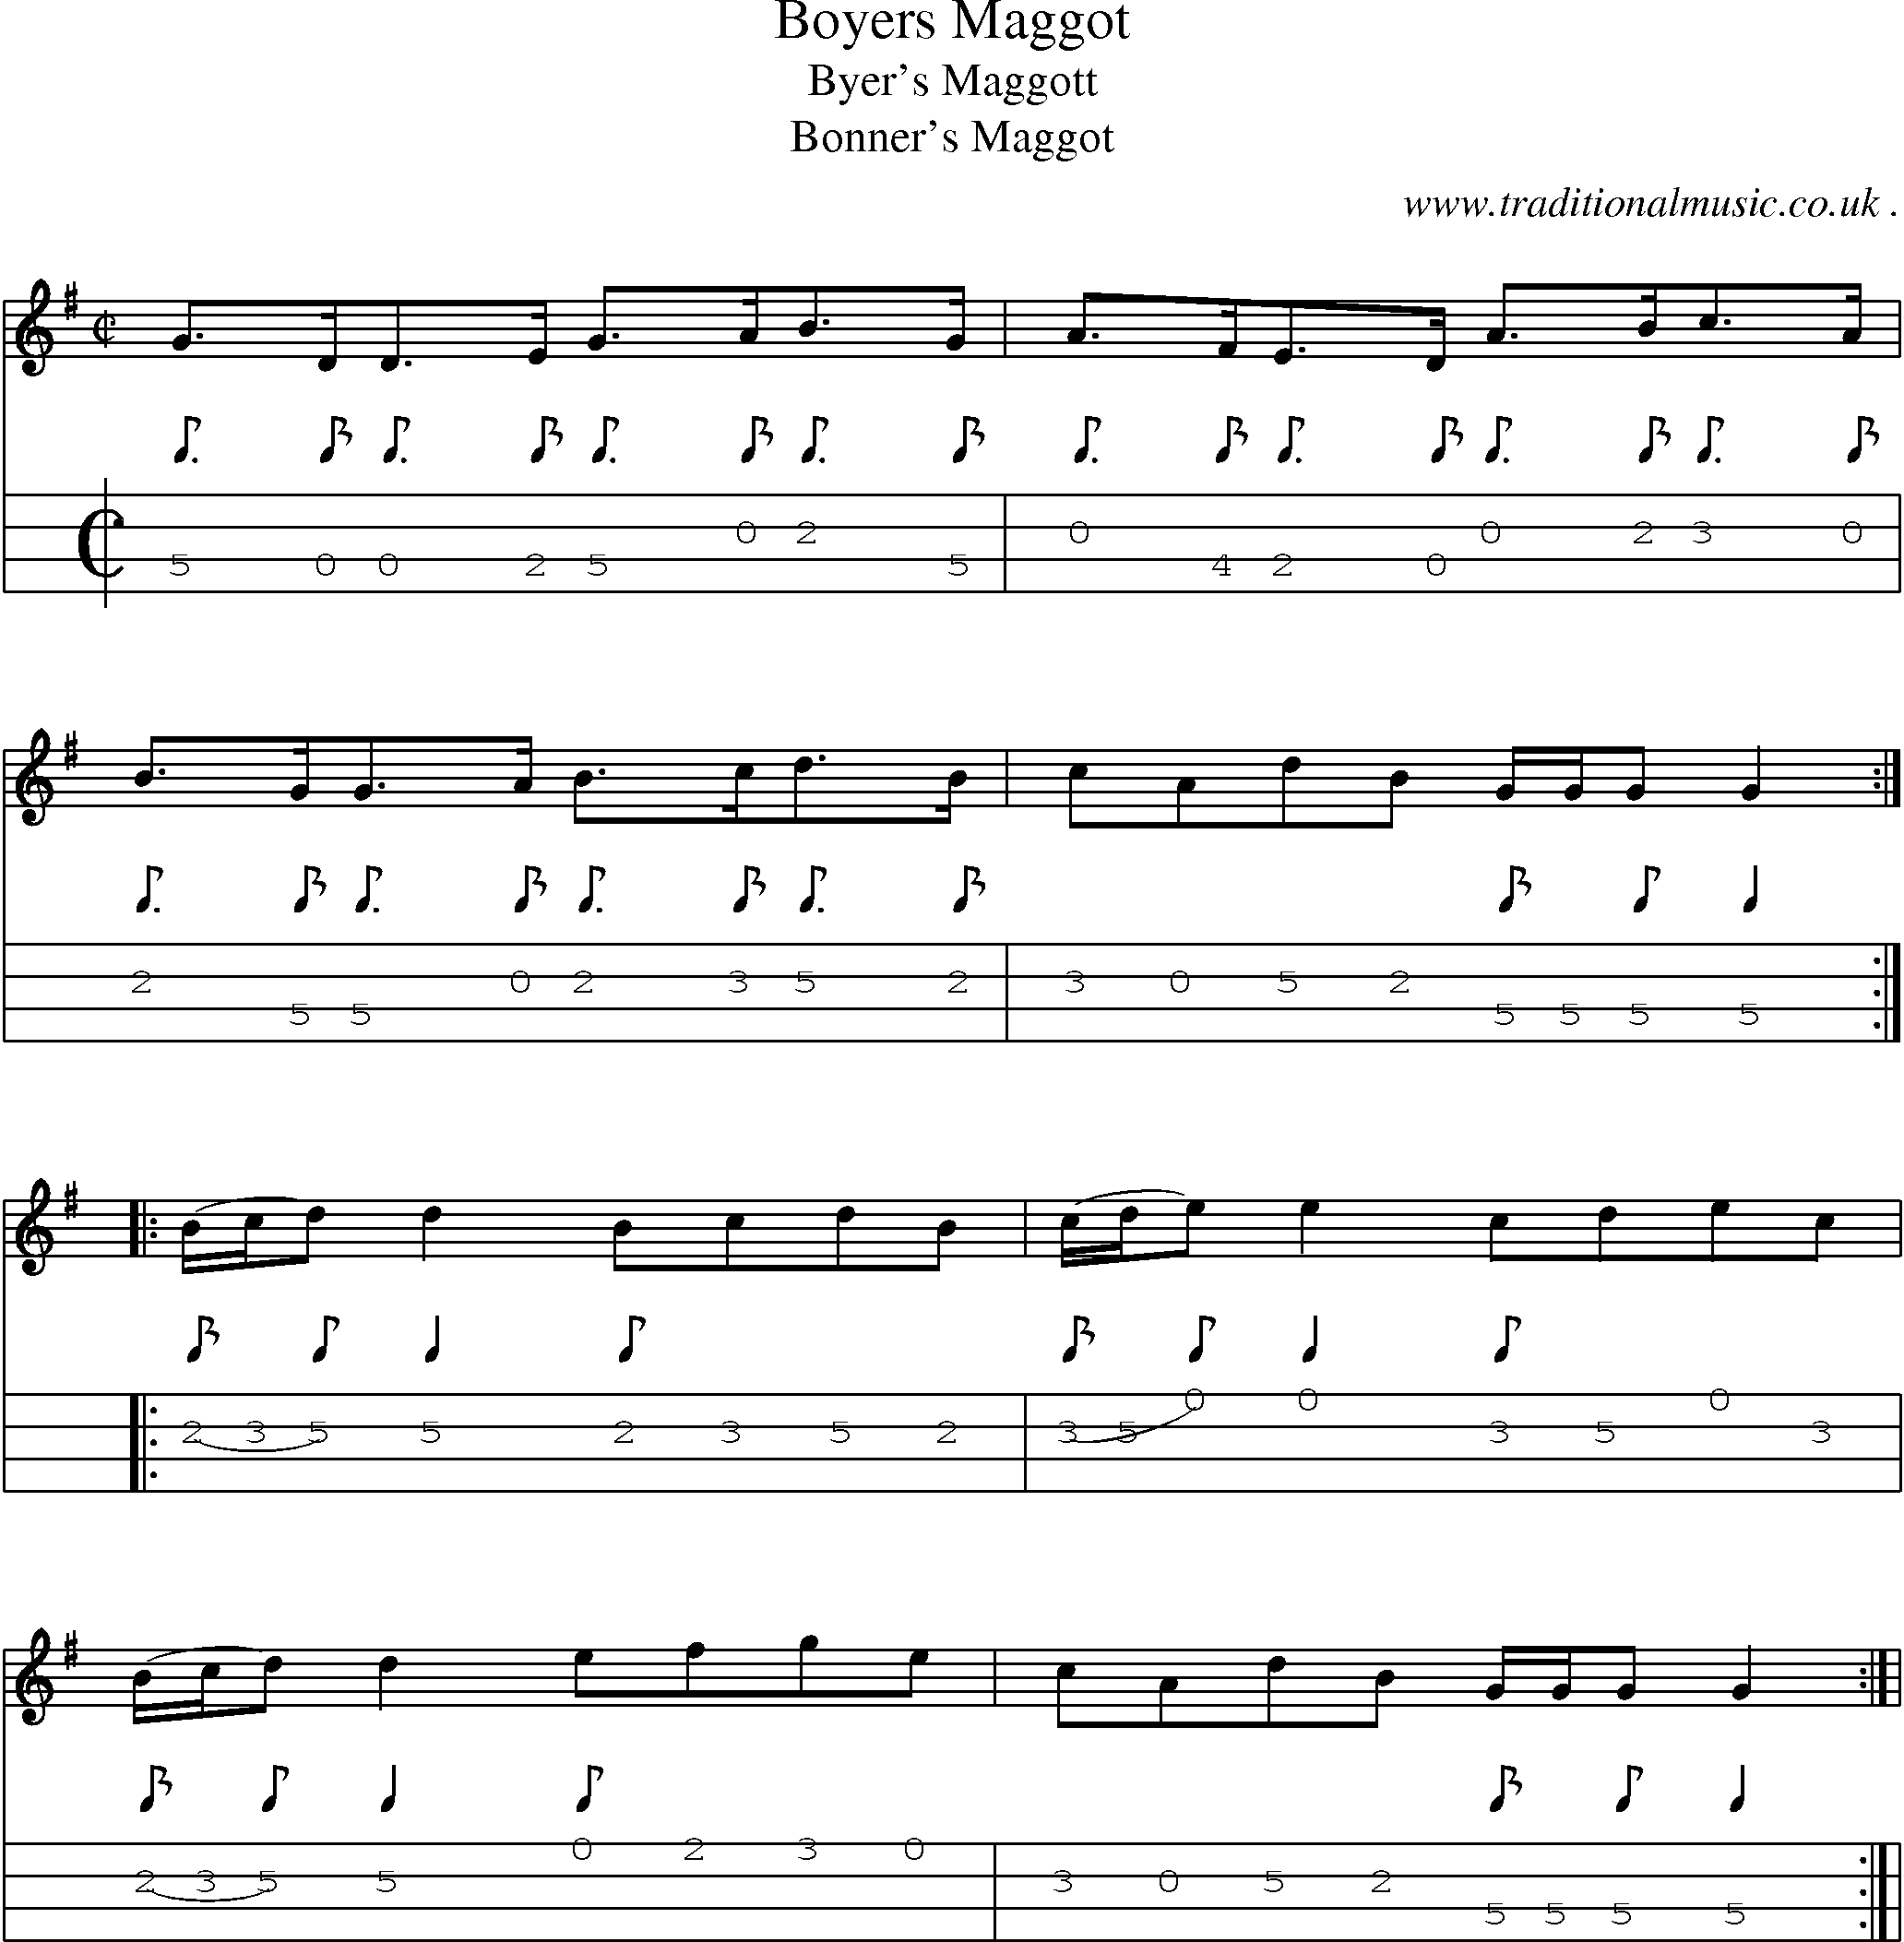 Sheet-Music and Mandolin Tabs for Boyers Maggot